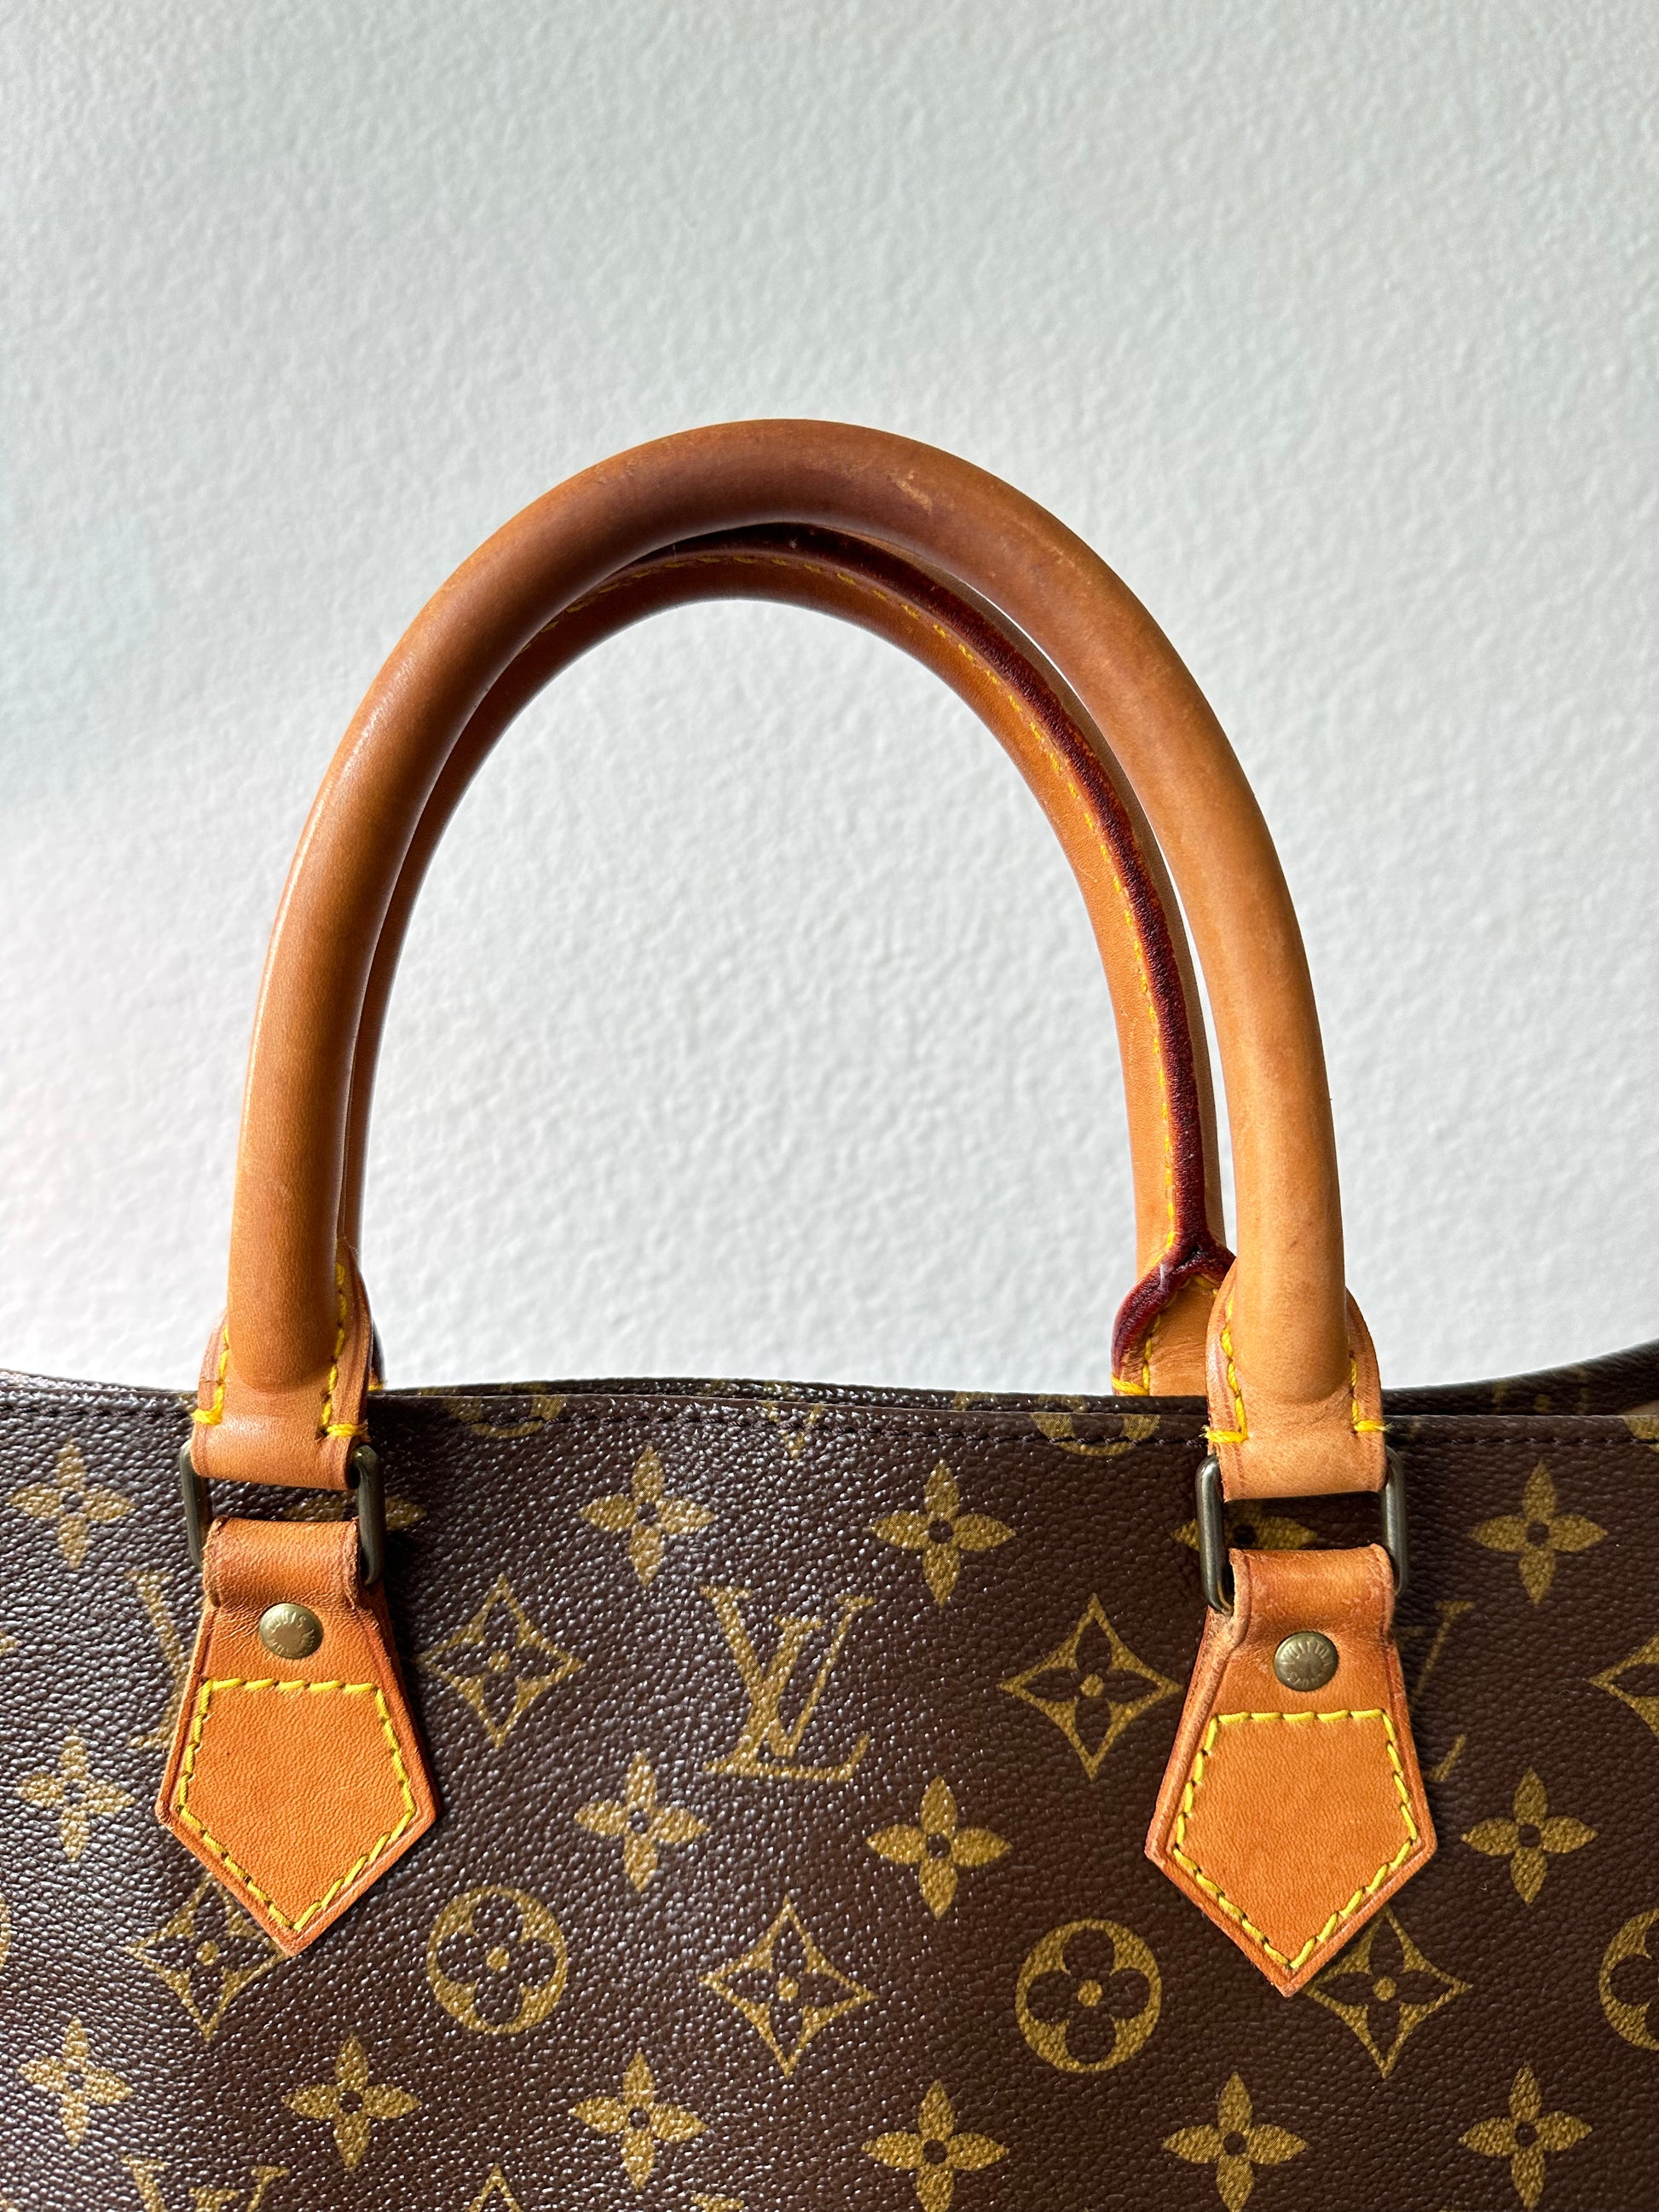 Pre Owned Authentic Louis Vuitton Handbags